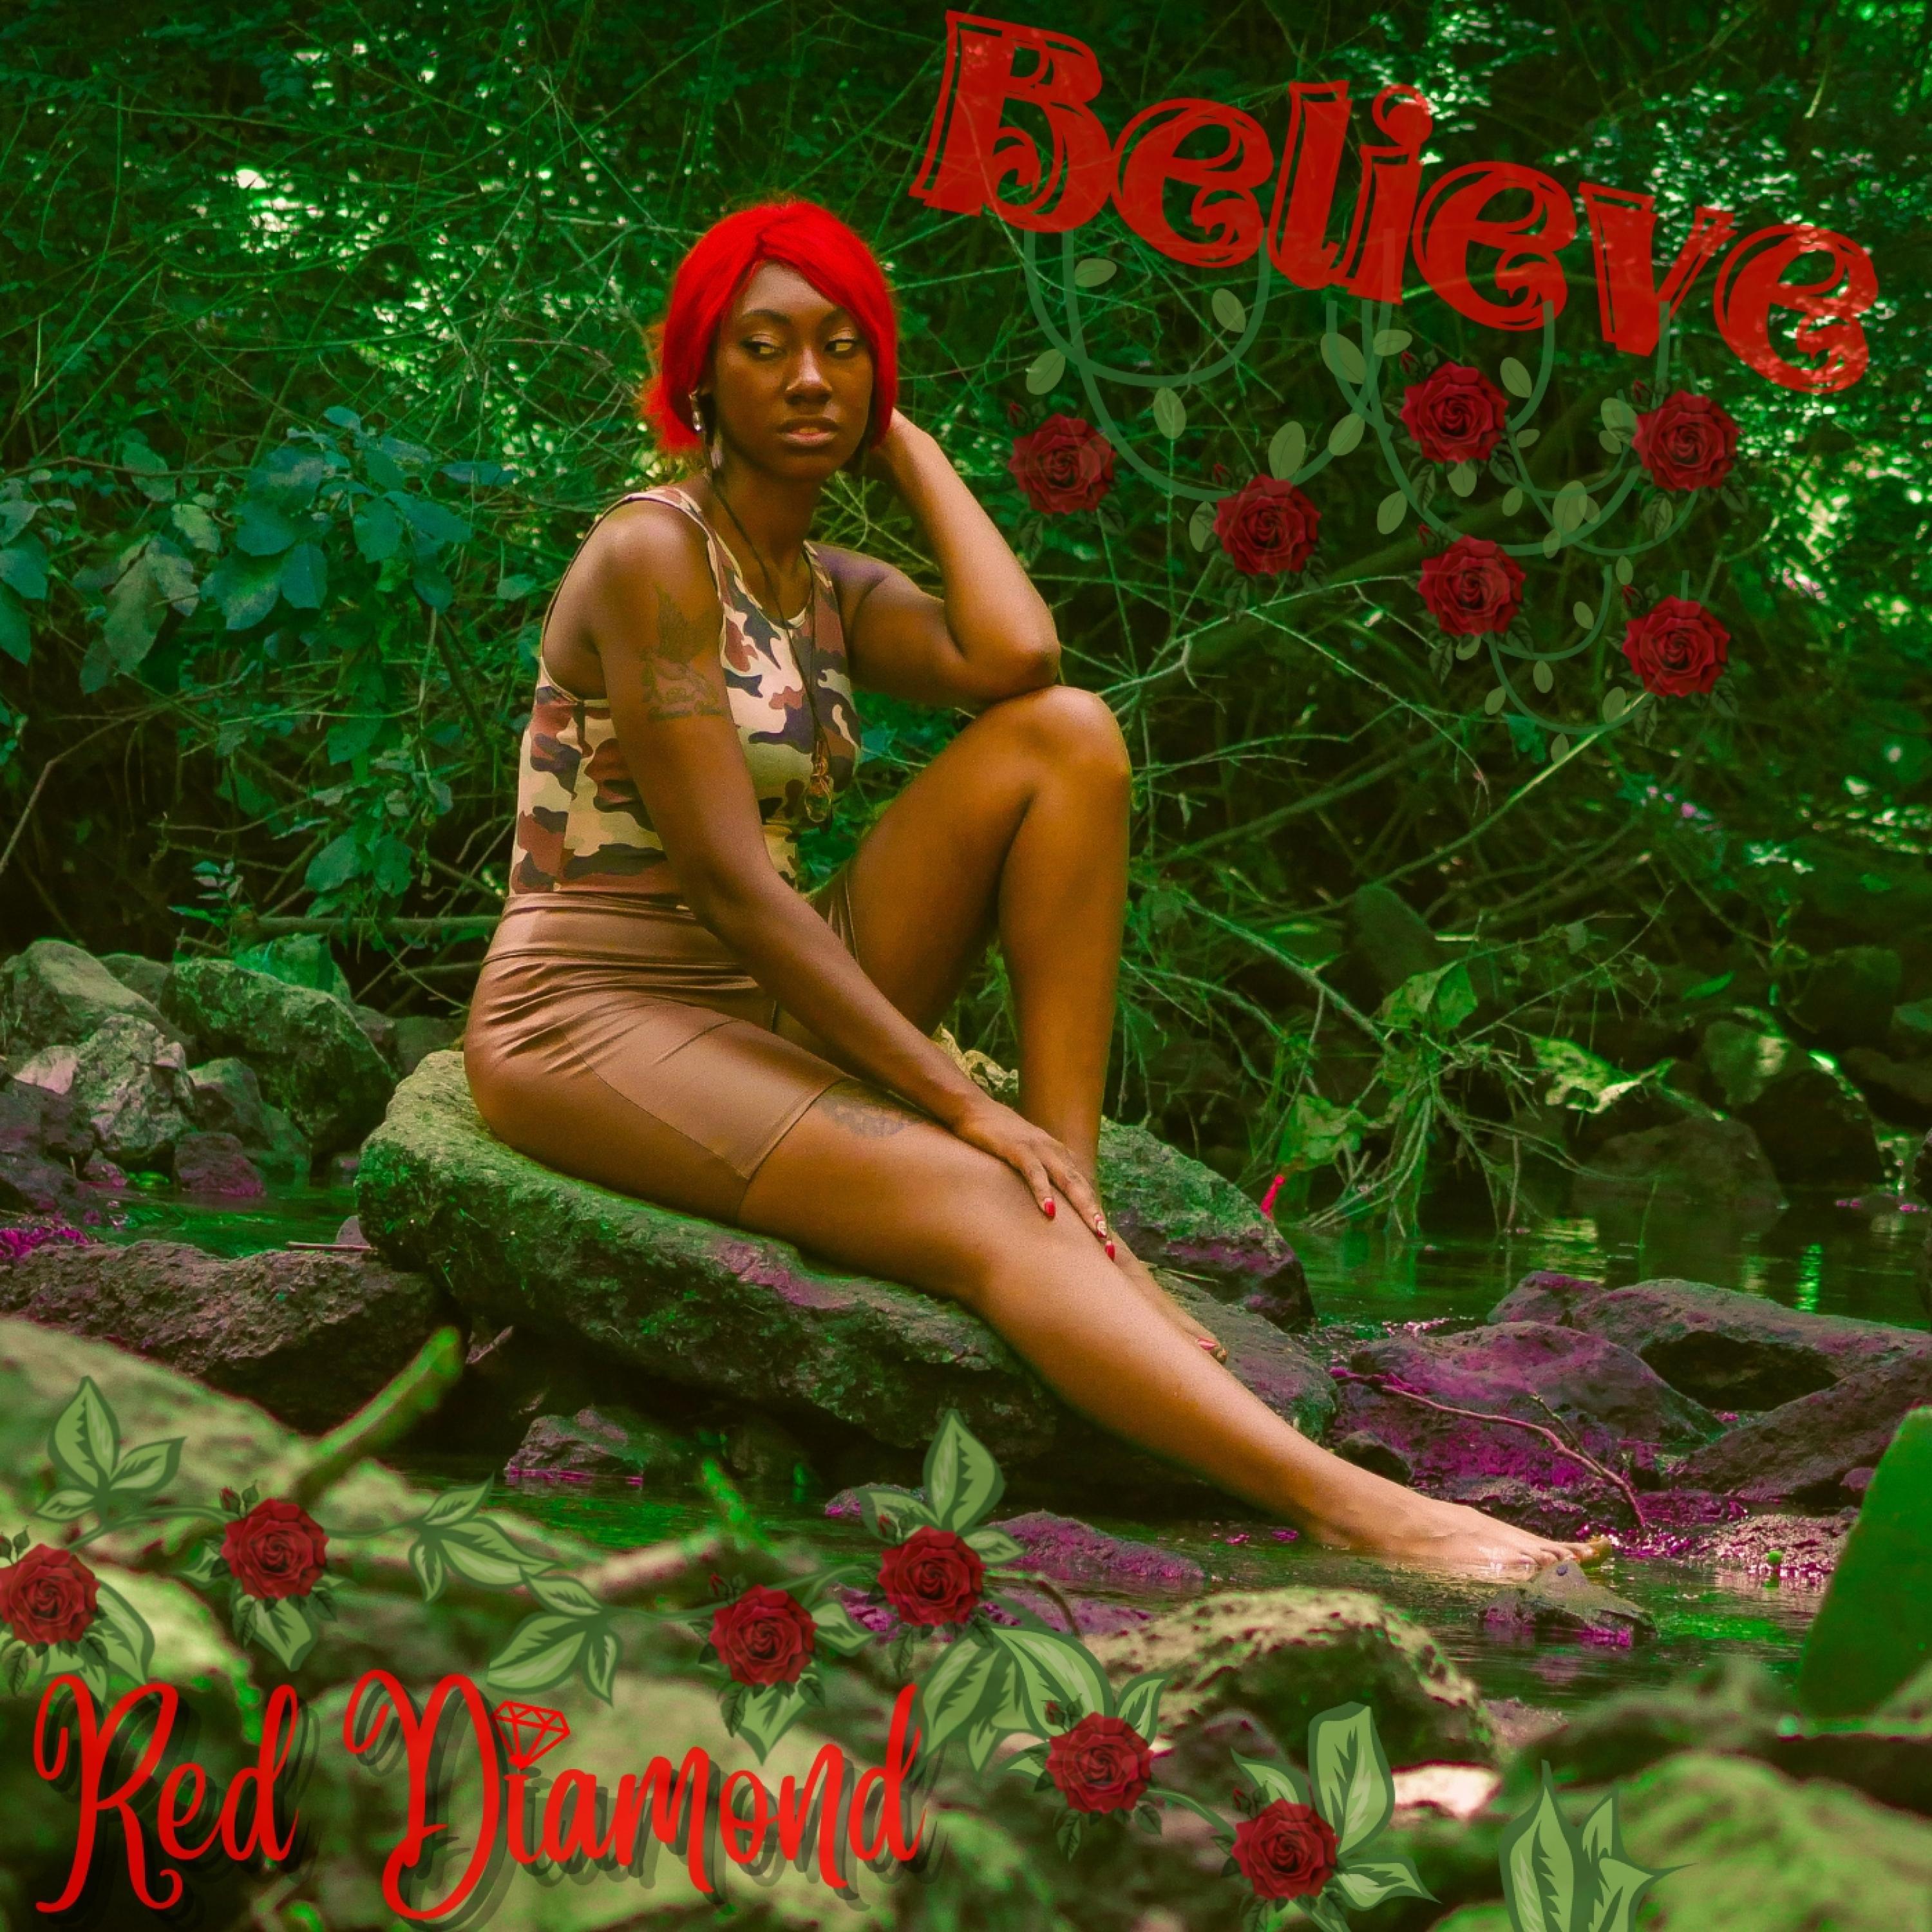 Red Diamond - Believe